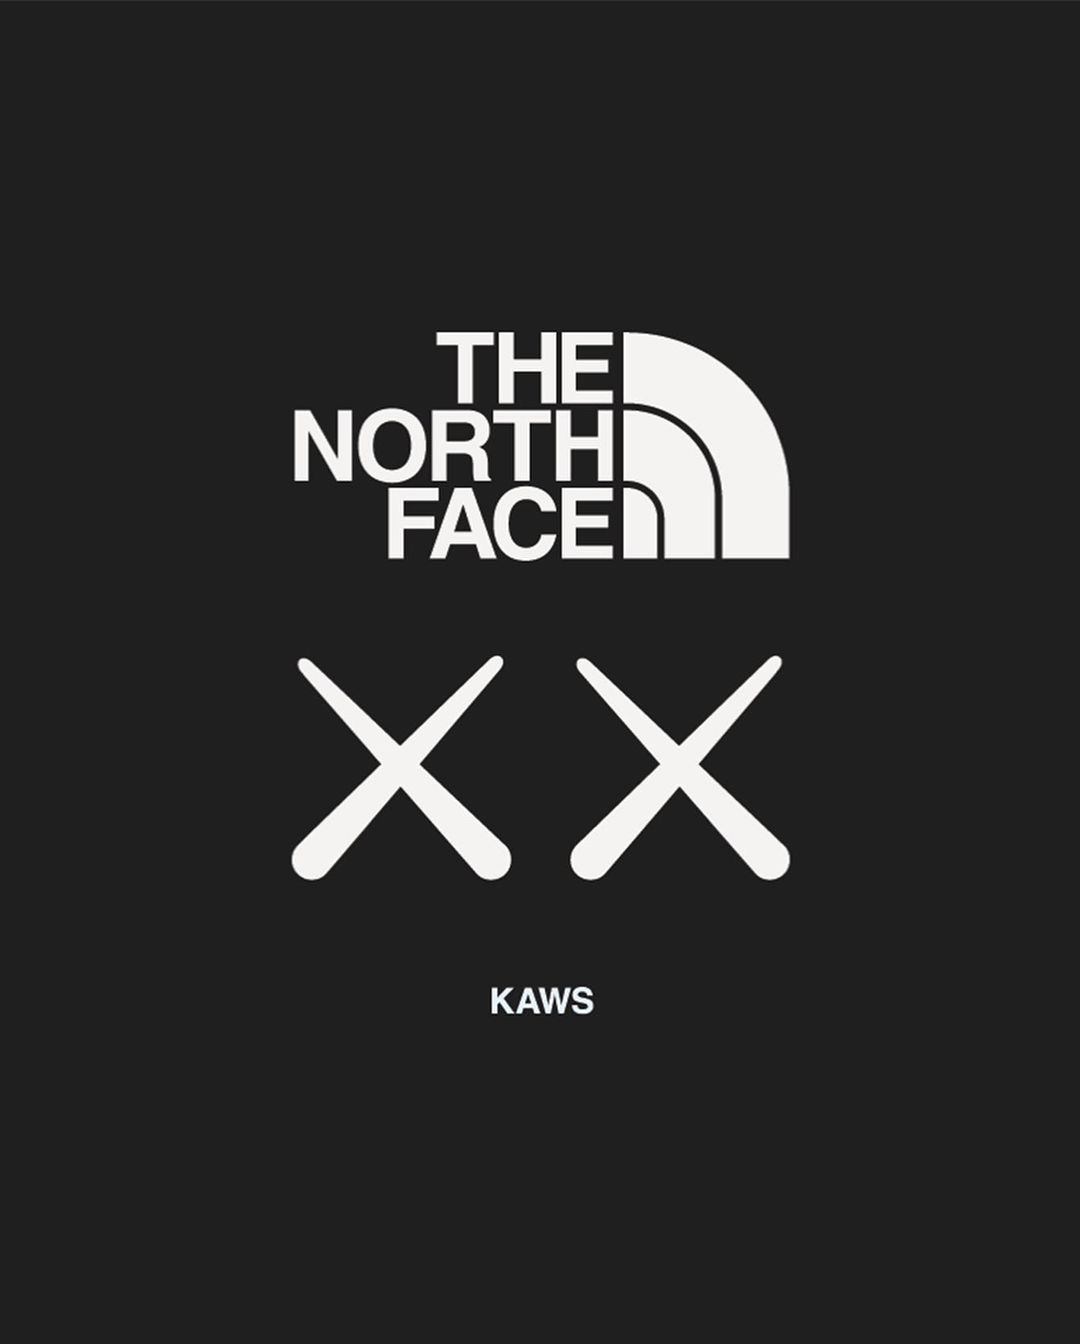 KAWS x THE NORTH FACE 联名系列将于今年发售